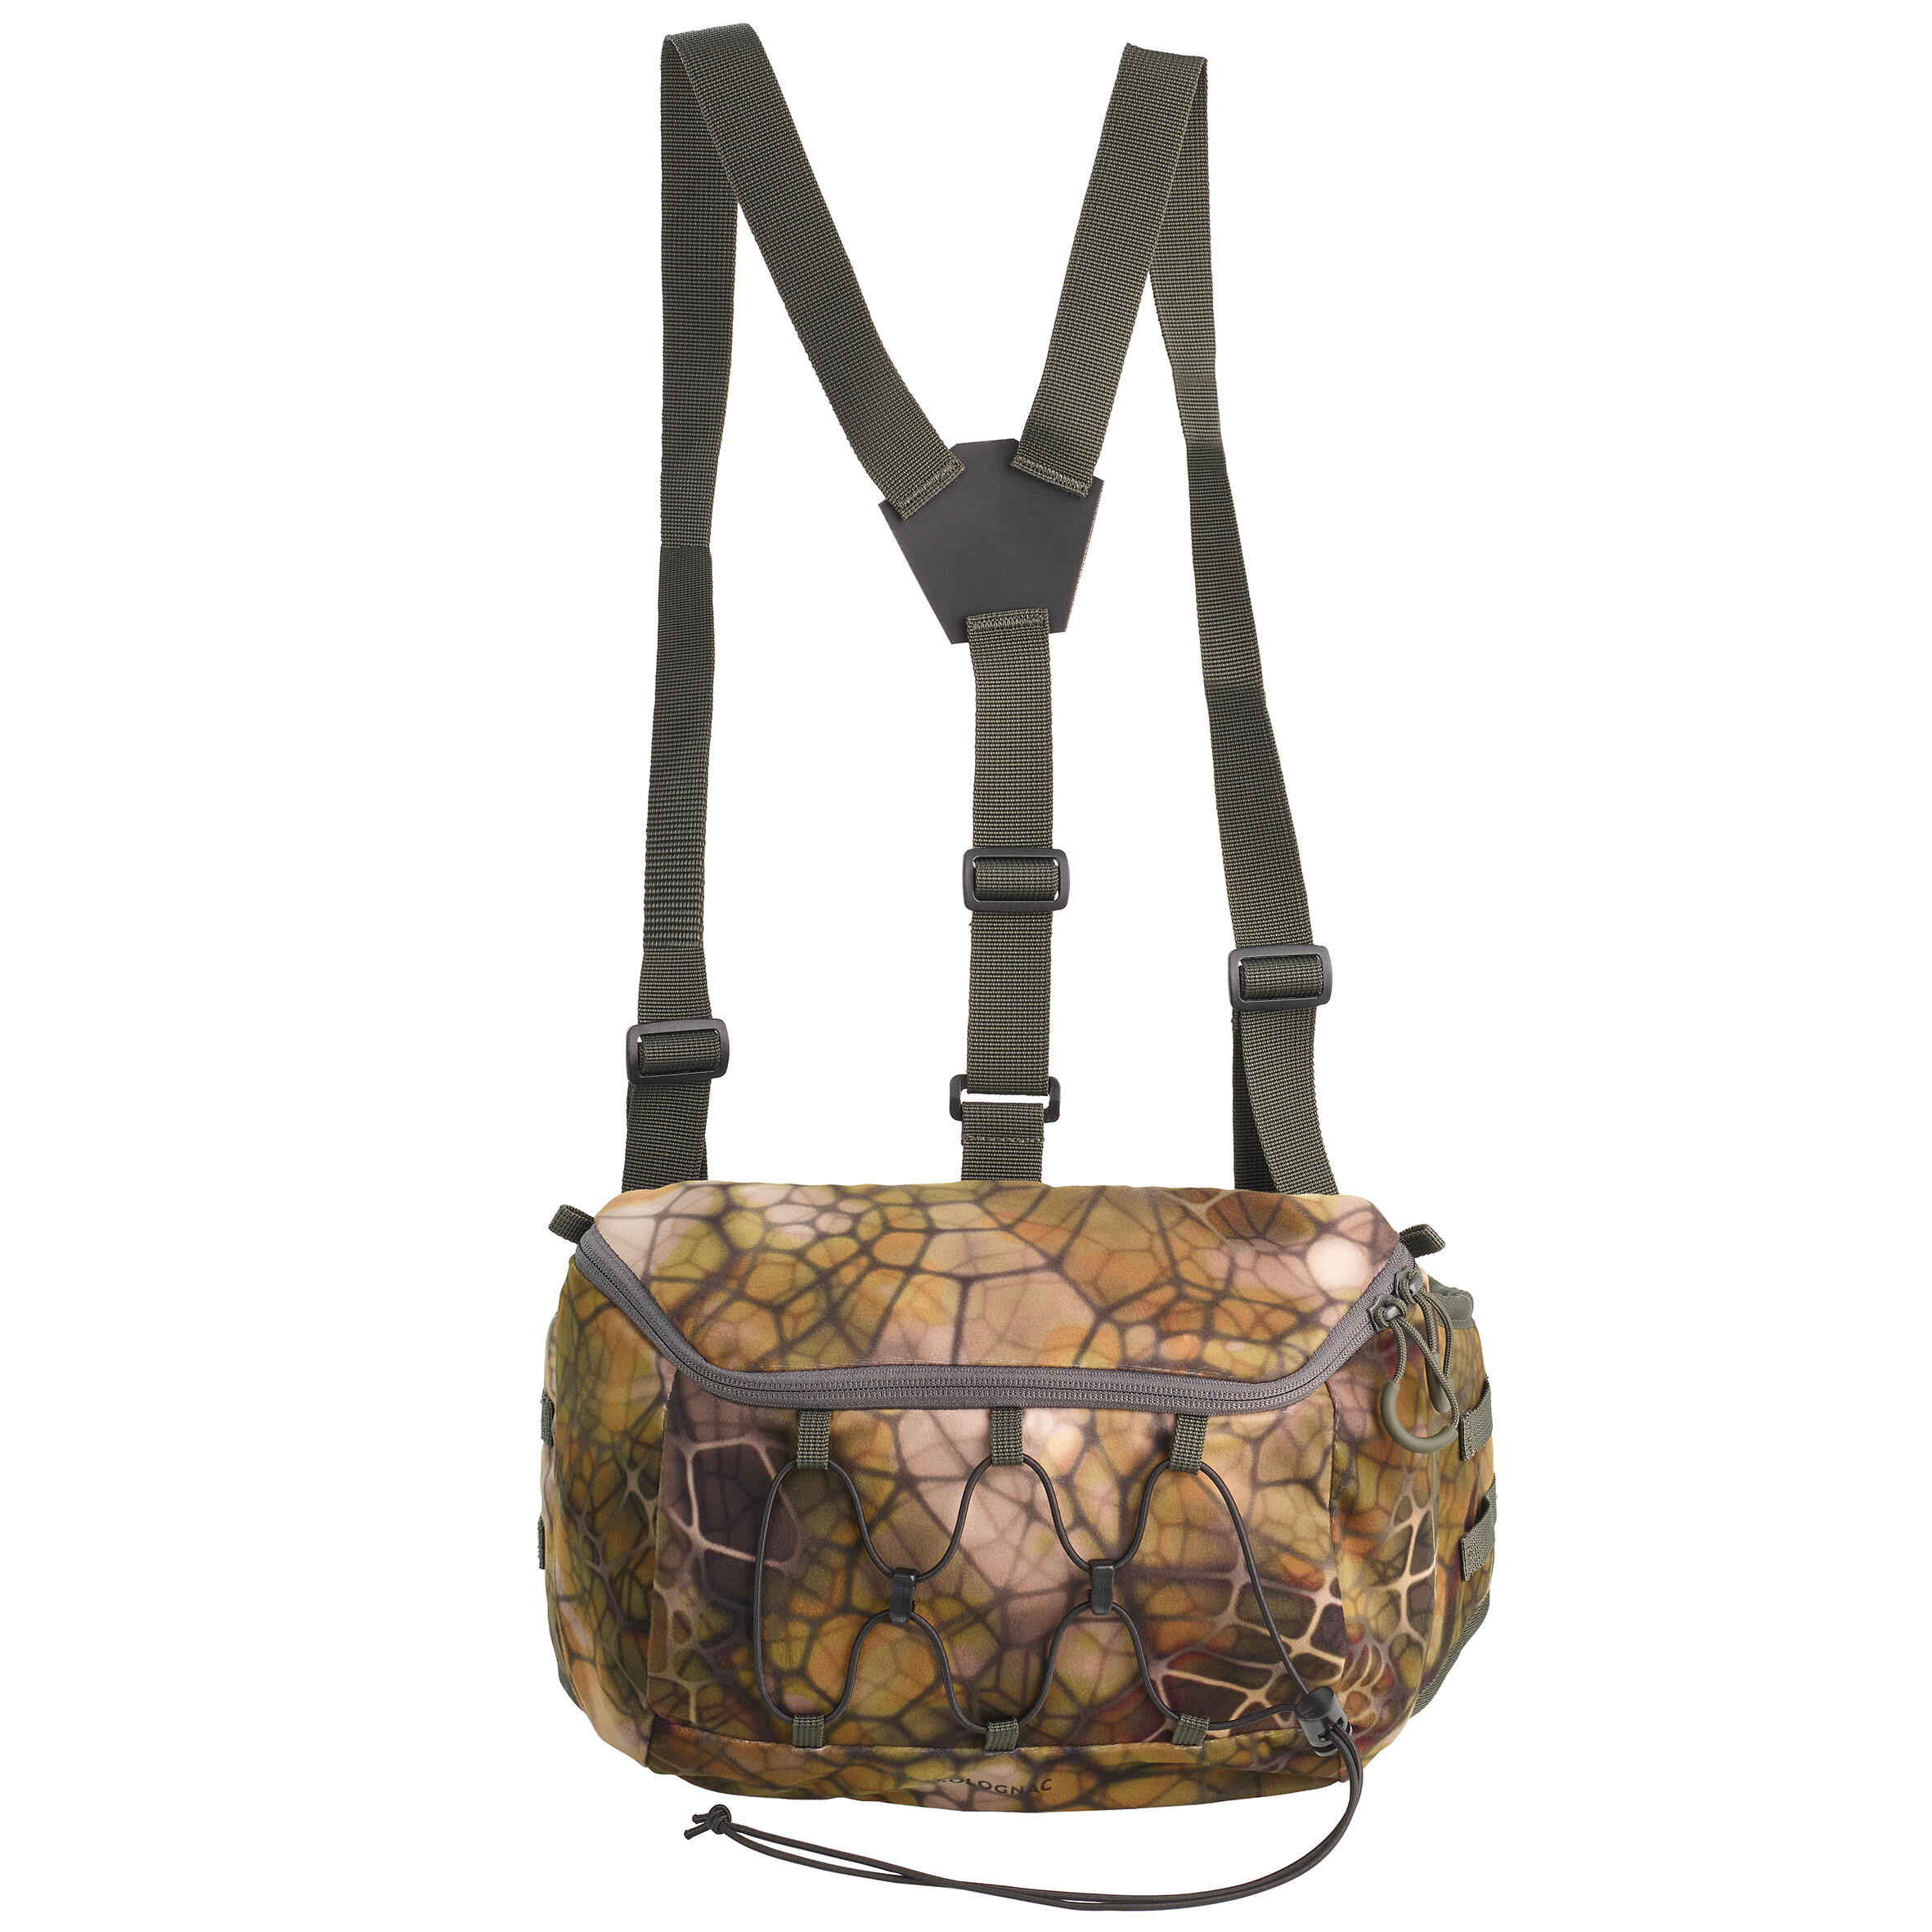 Silent Hunting Sling Bum Bag 10 L - Camouflage Furtiv - SOLOGNAC